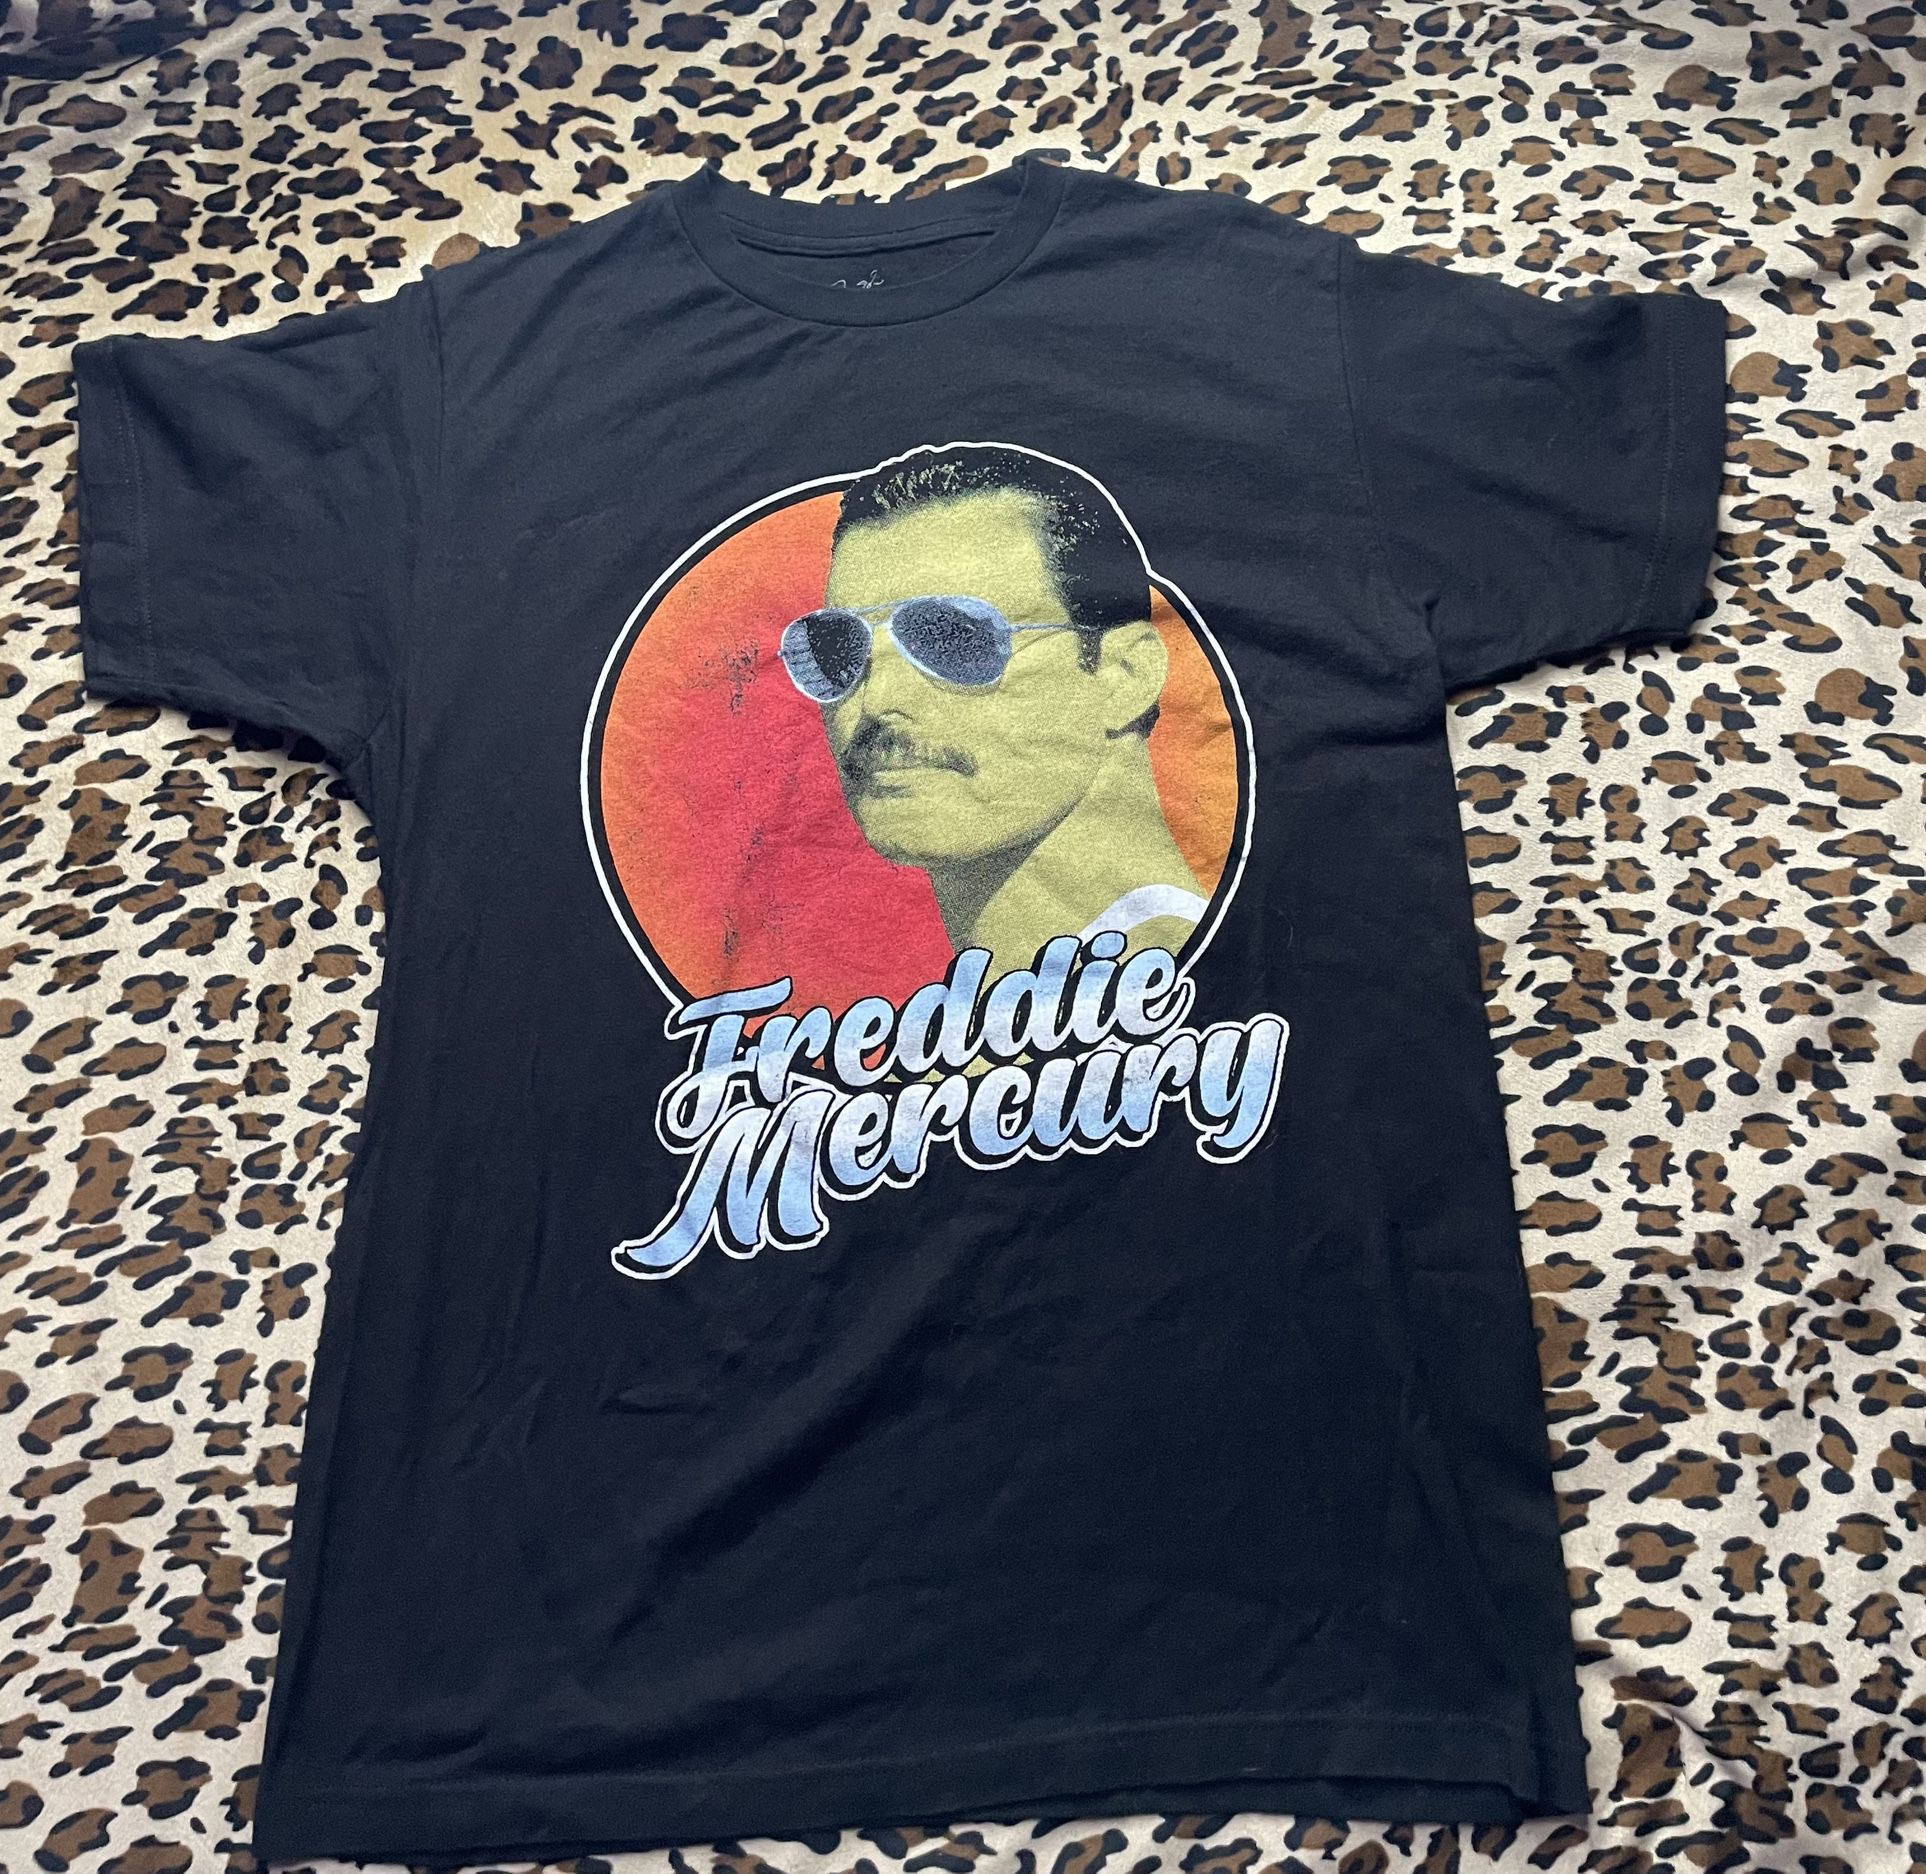 Freddie Mercury shirt